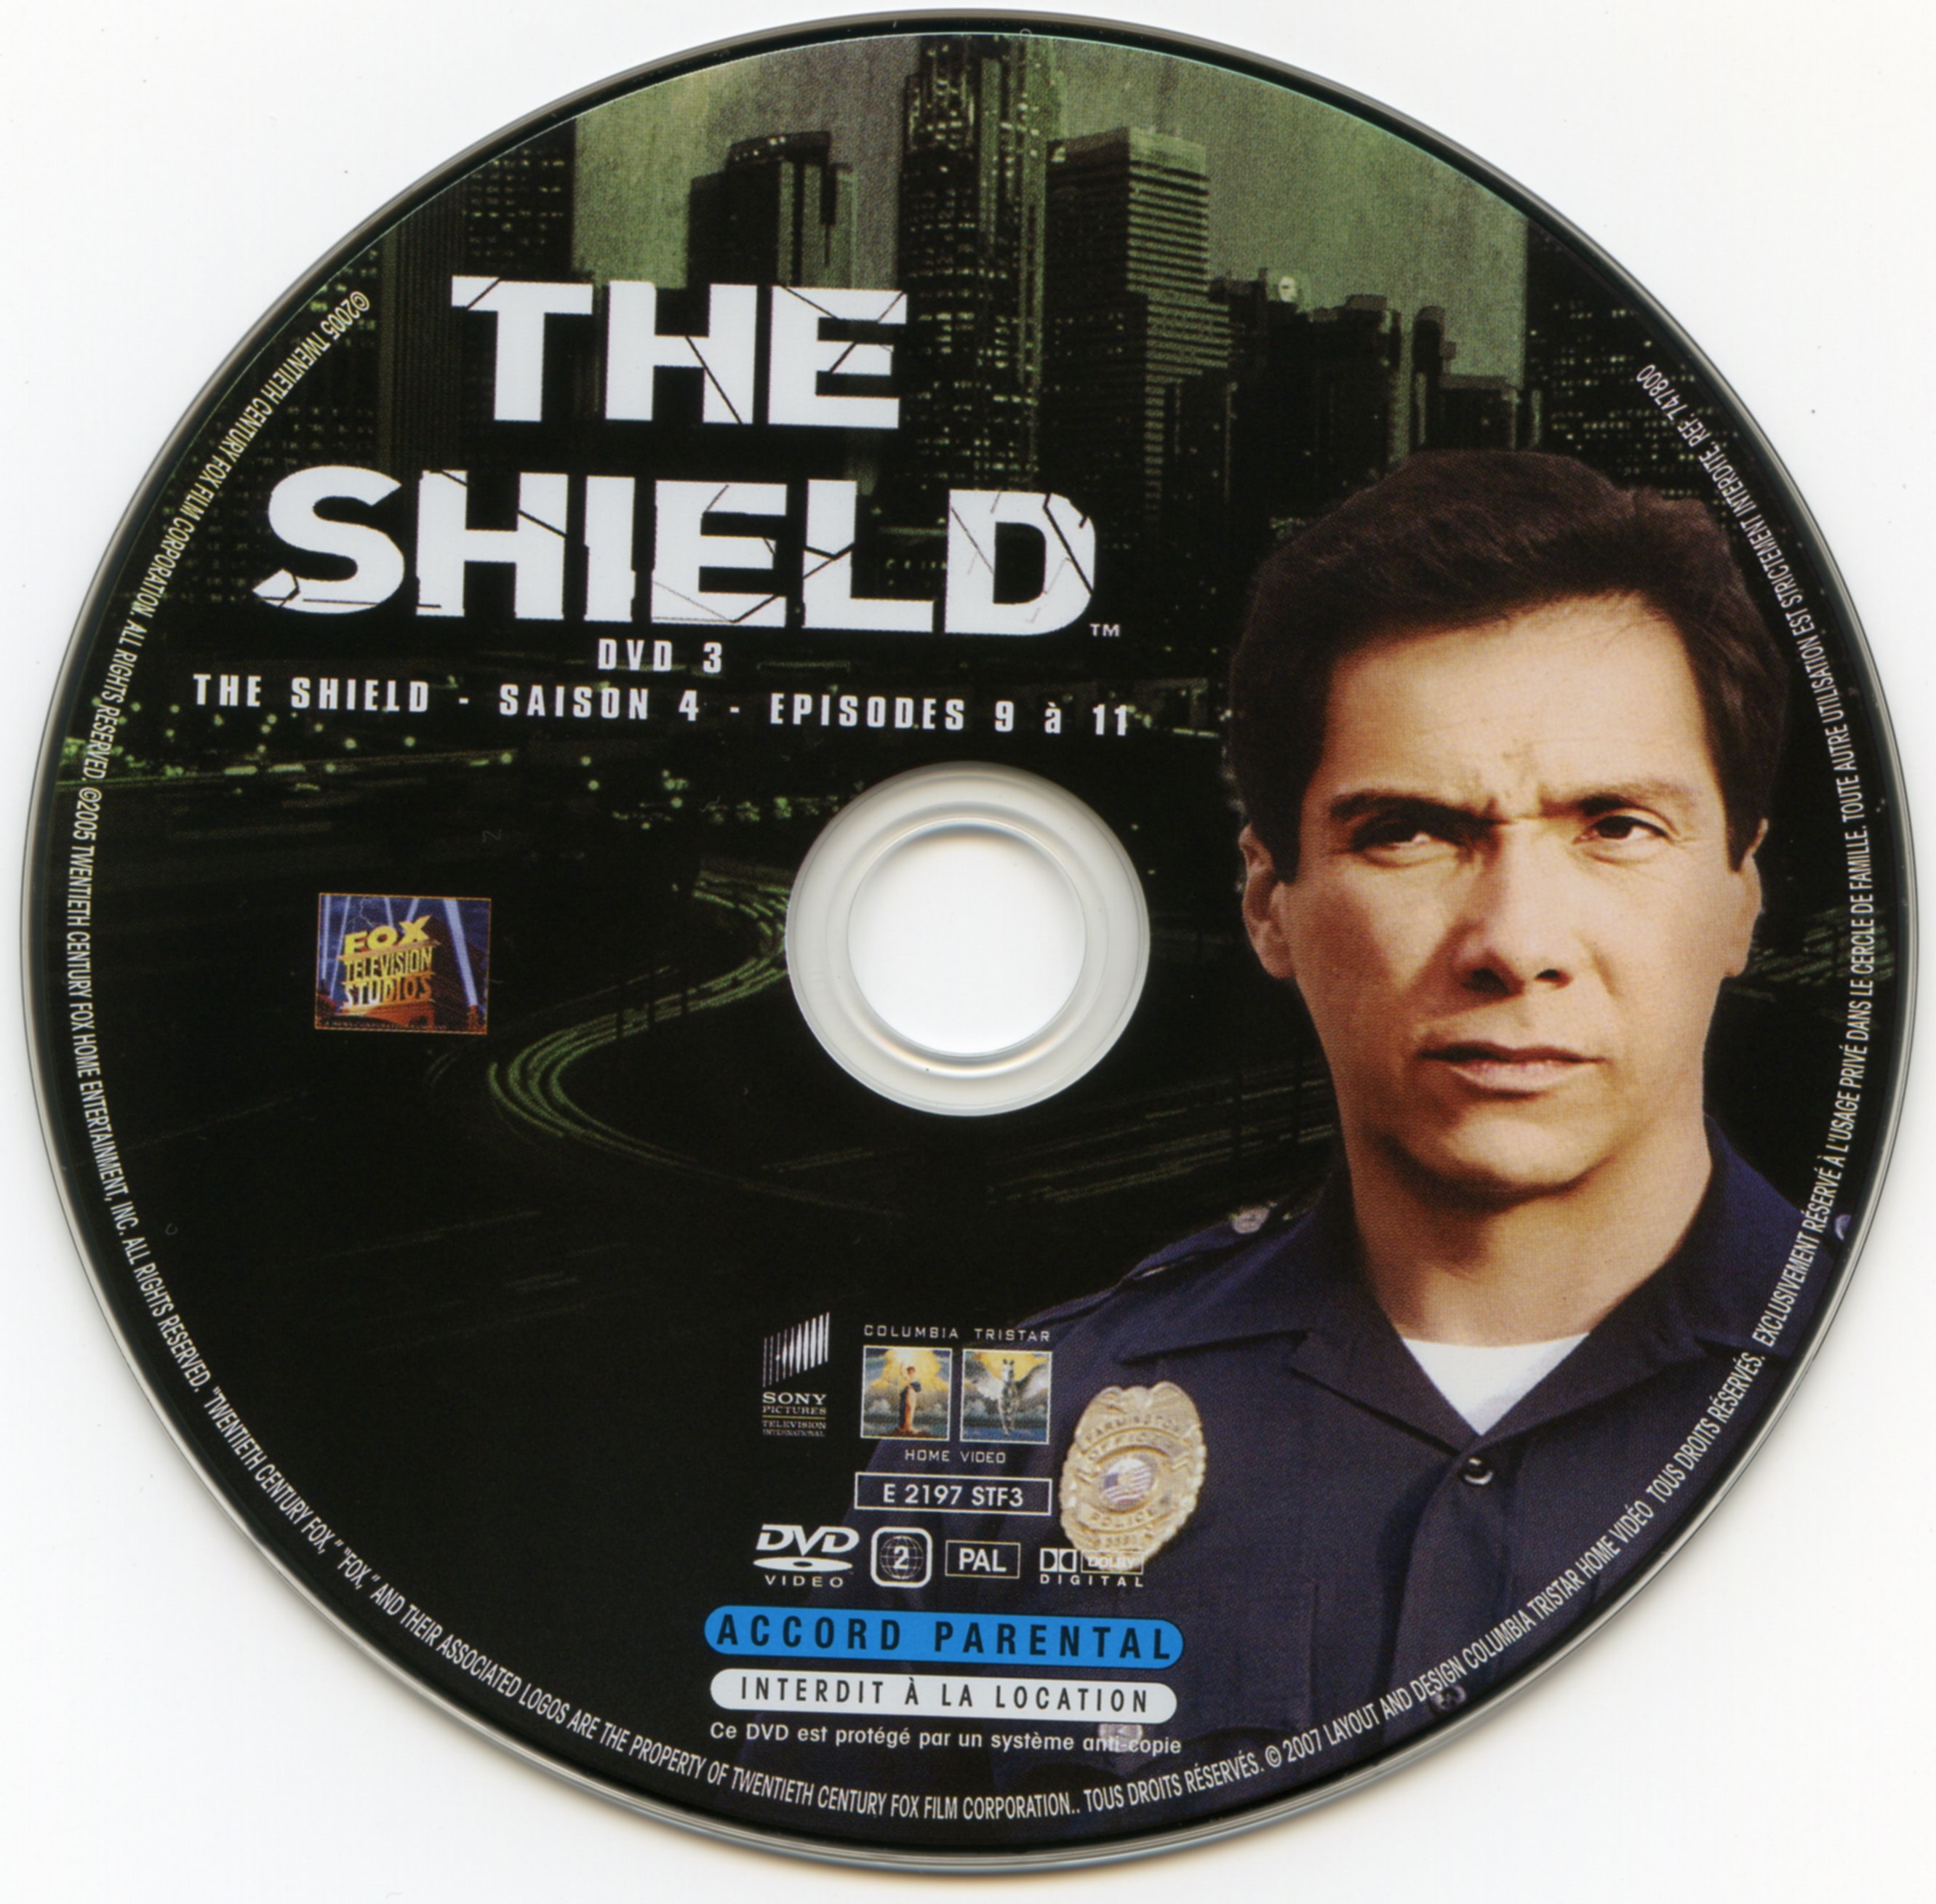 The shield saison 4 DVD 3